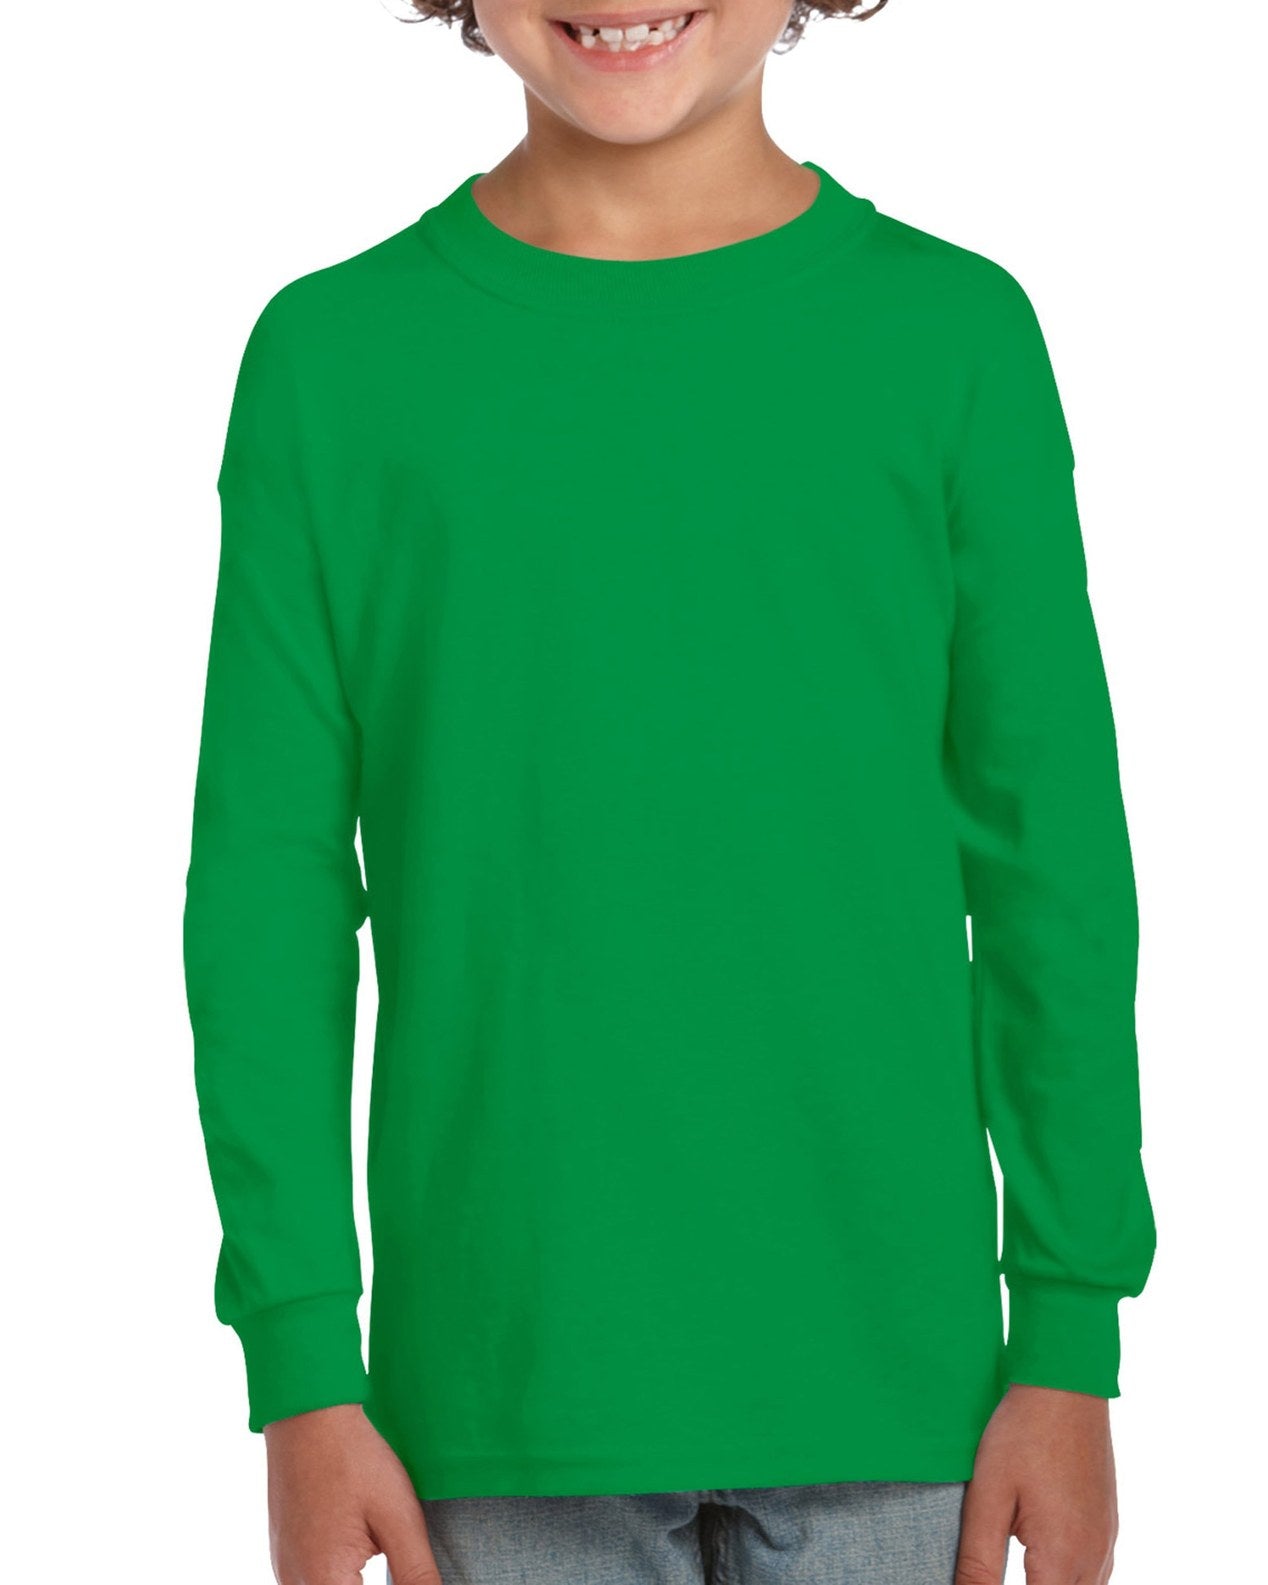 Gildan, Shirts & Tops, Gildan Kelly Green Tshirt Size Ym 12